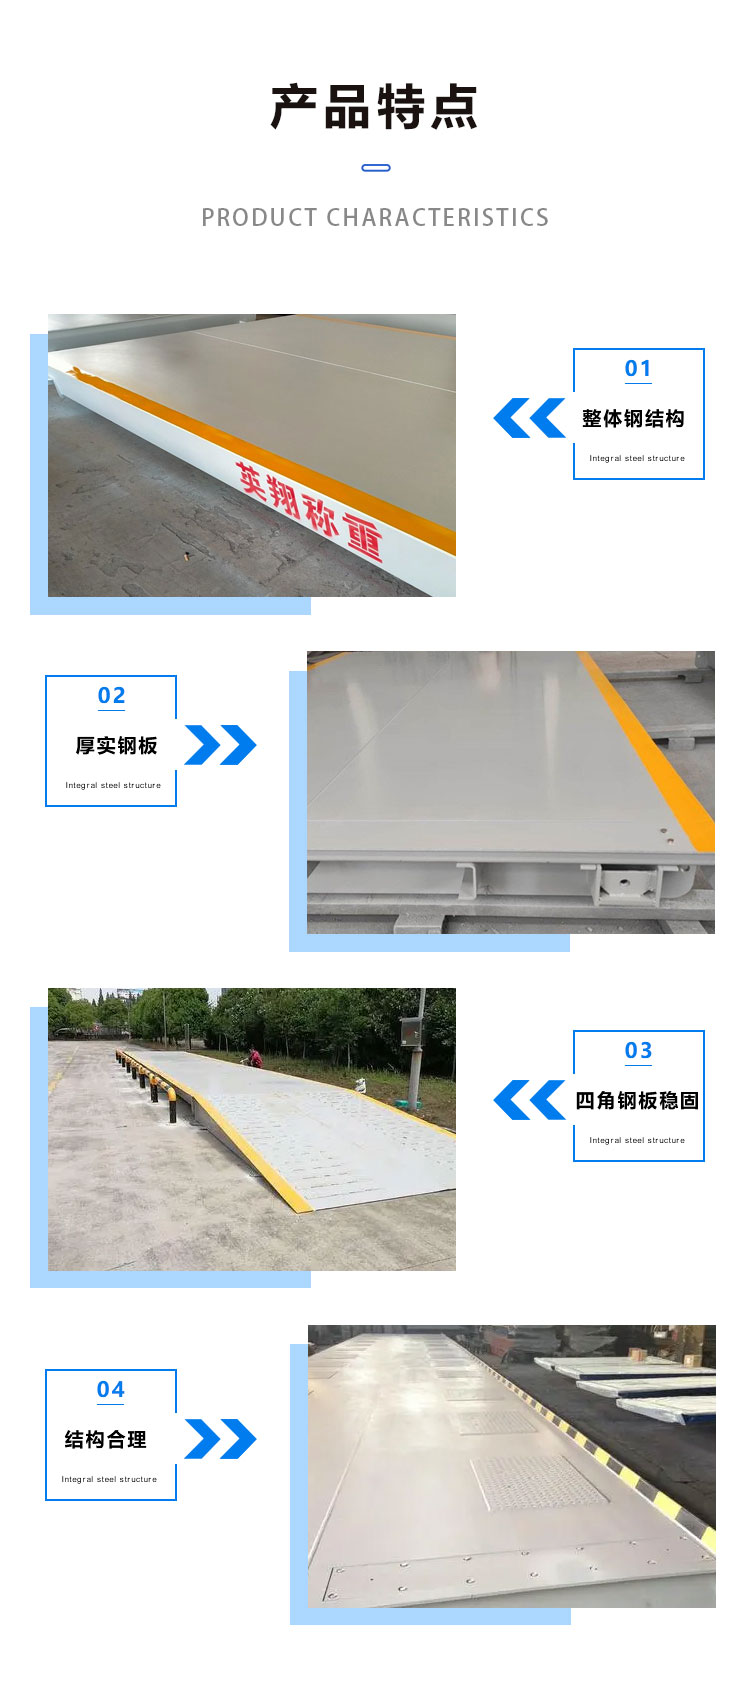 Electronic truck scale 100 ton weighbridge digital weighing sensor Internet of Things instrument Yingxiang weighing equipment